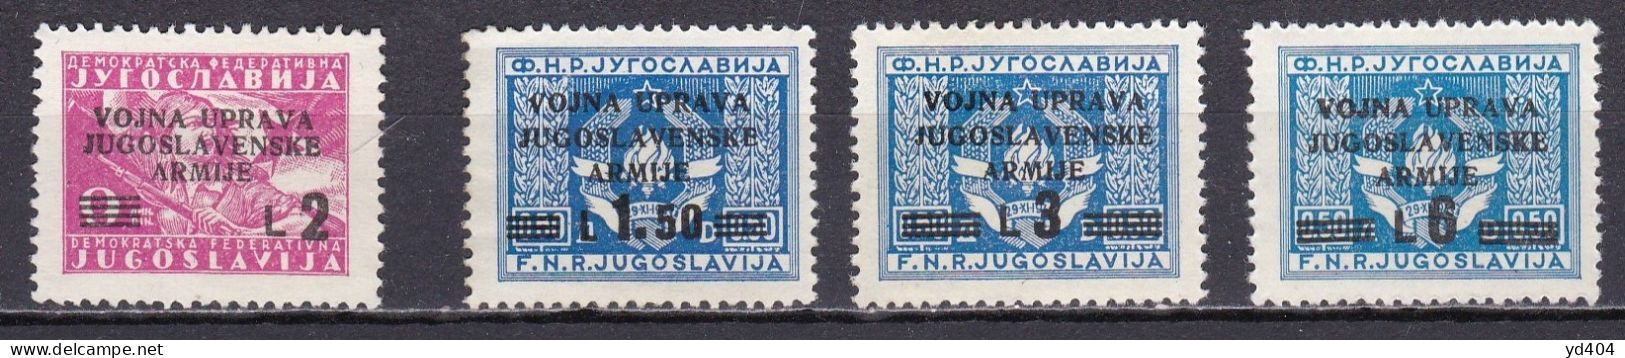 IT505 – ITALY – ISTRIA – 1947 – YOUGOSLAVIAN OCC. LOT – CV 4 € - Yugoslavian Occ.: Istria